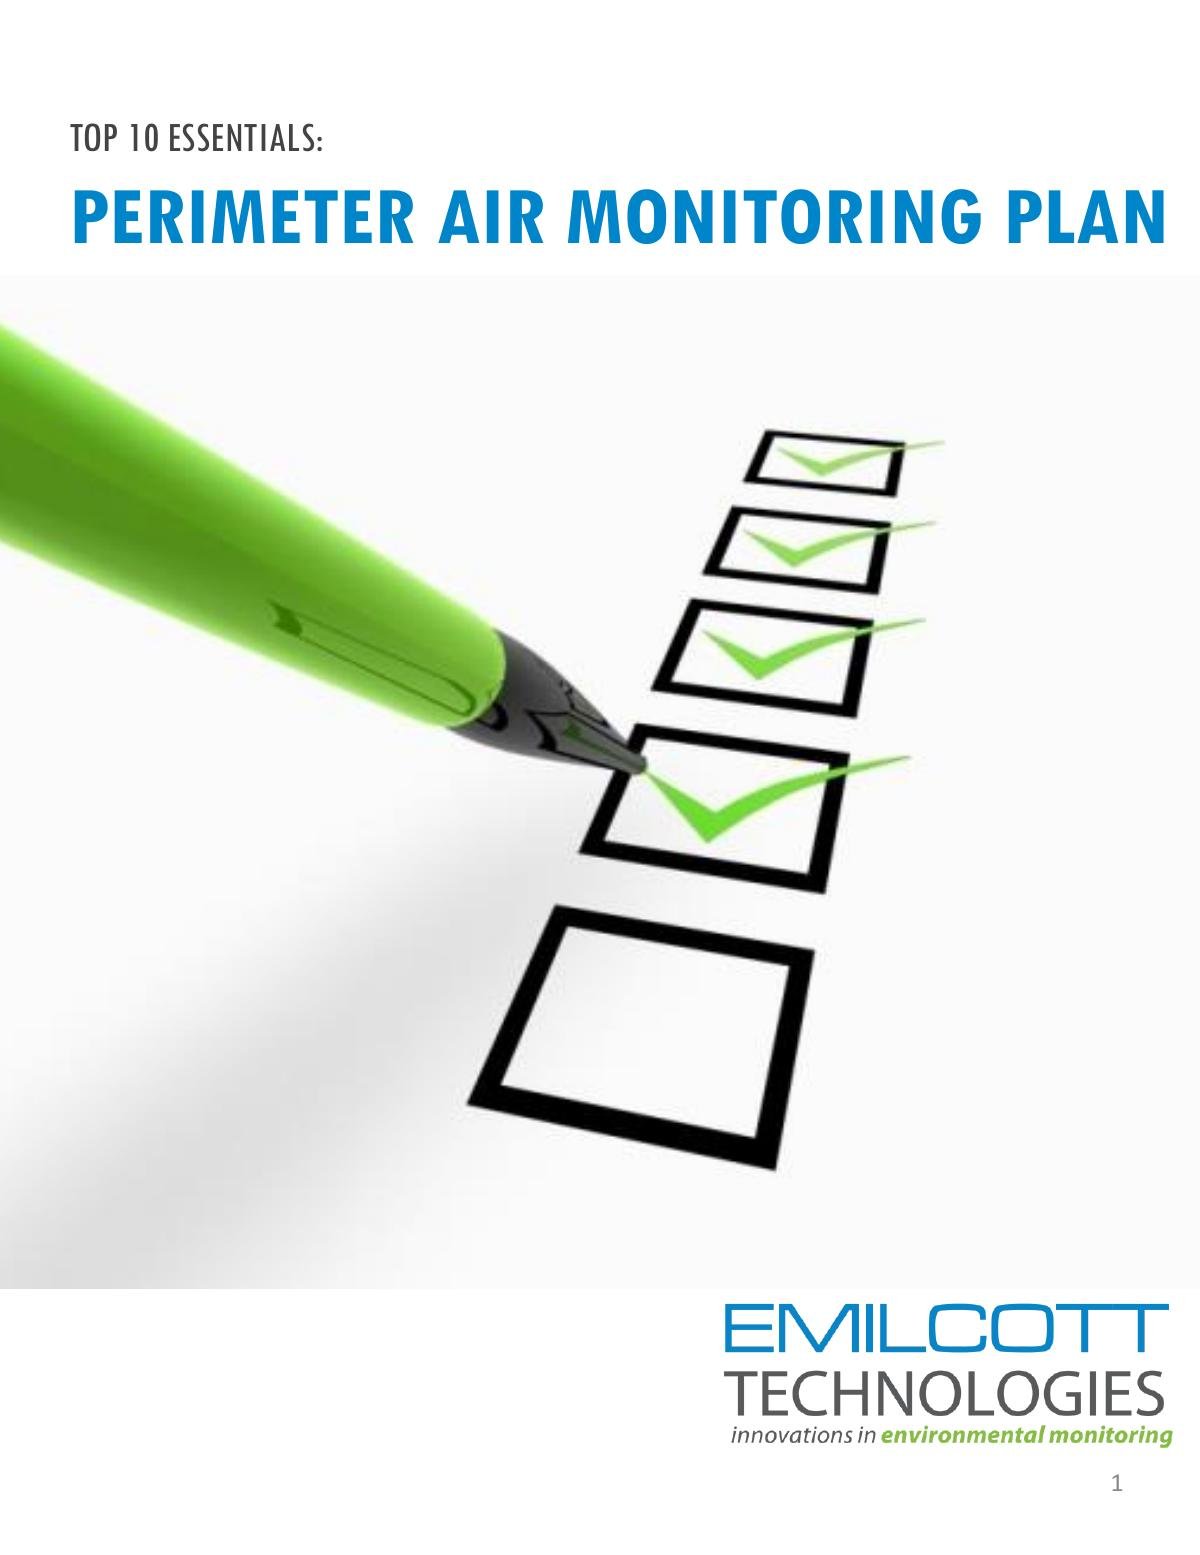 Top 10 Essentials: Perimeter Air Monitoring Plan